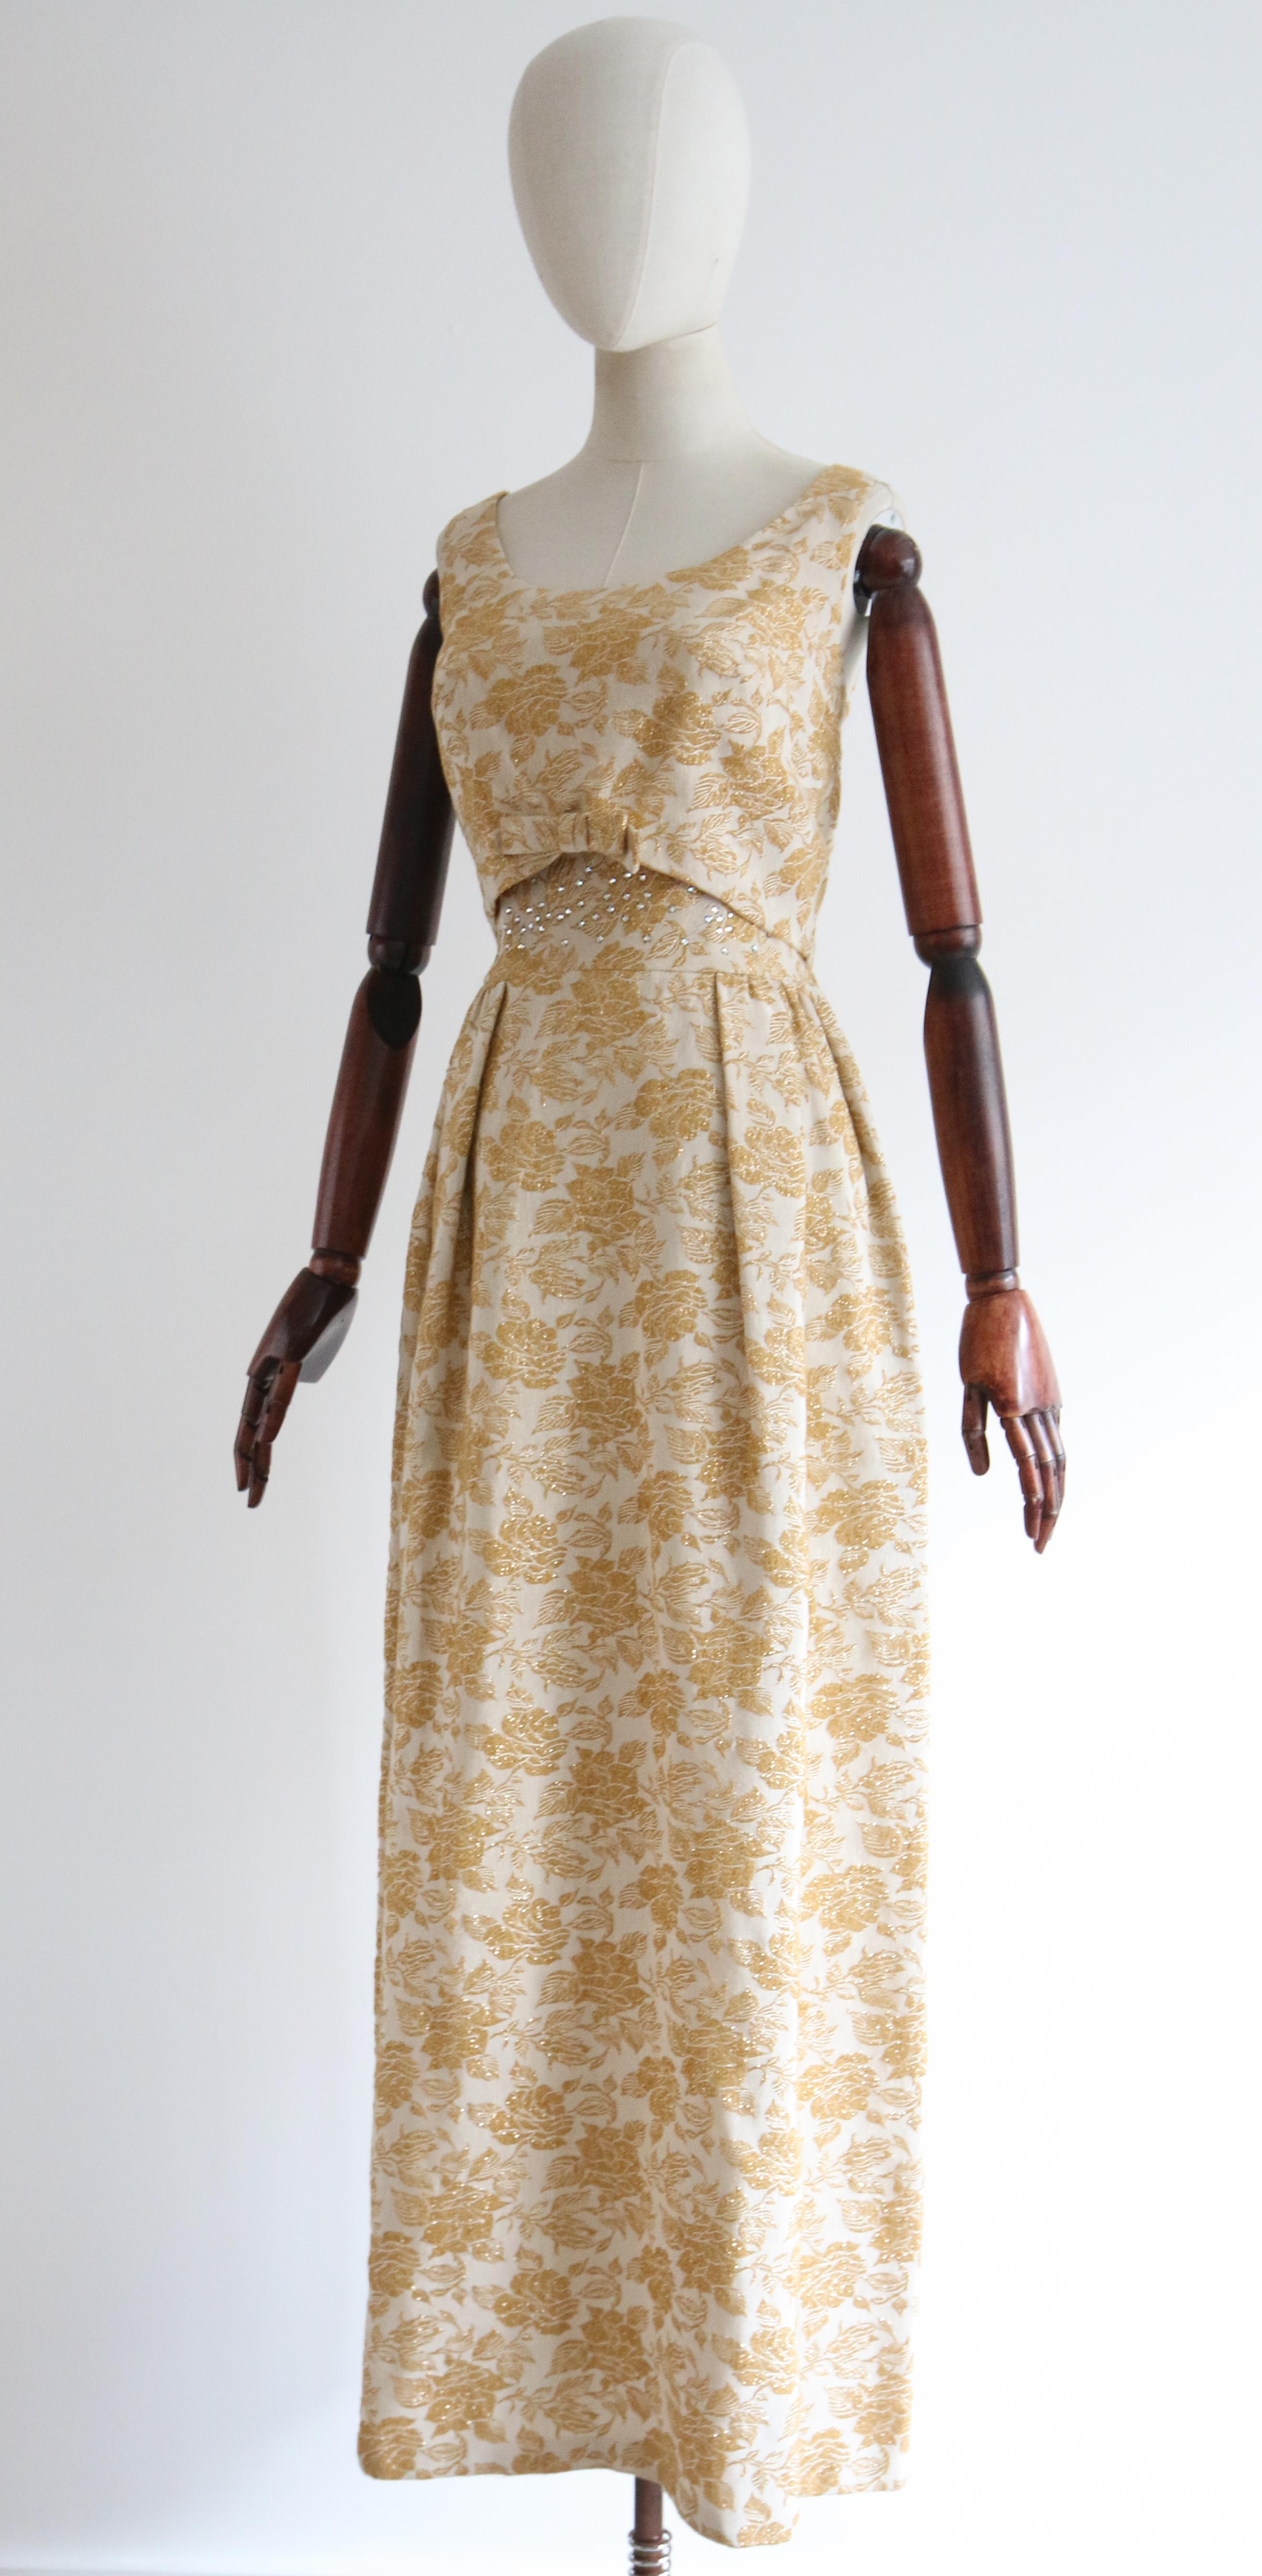  Vintage 1960's Gold Lurex Brocade & Rhinestone Evening Gown UK 8 US 4 For Sale 3